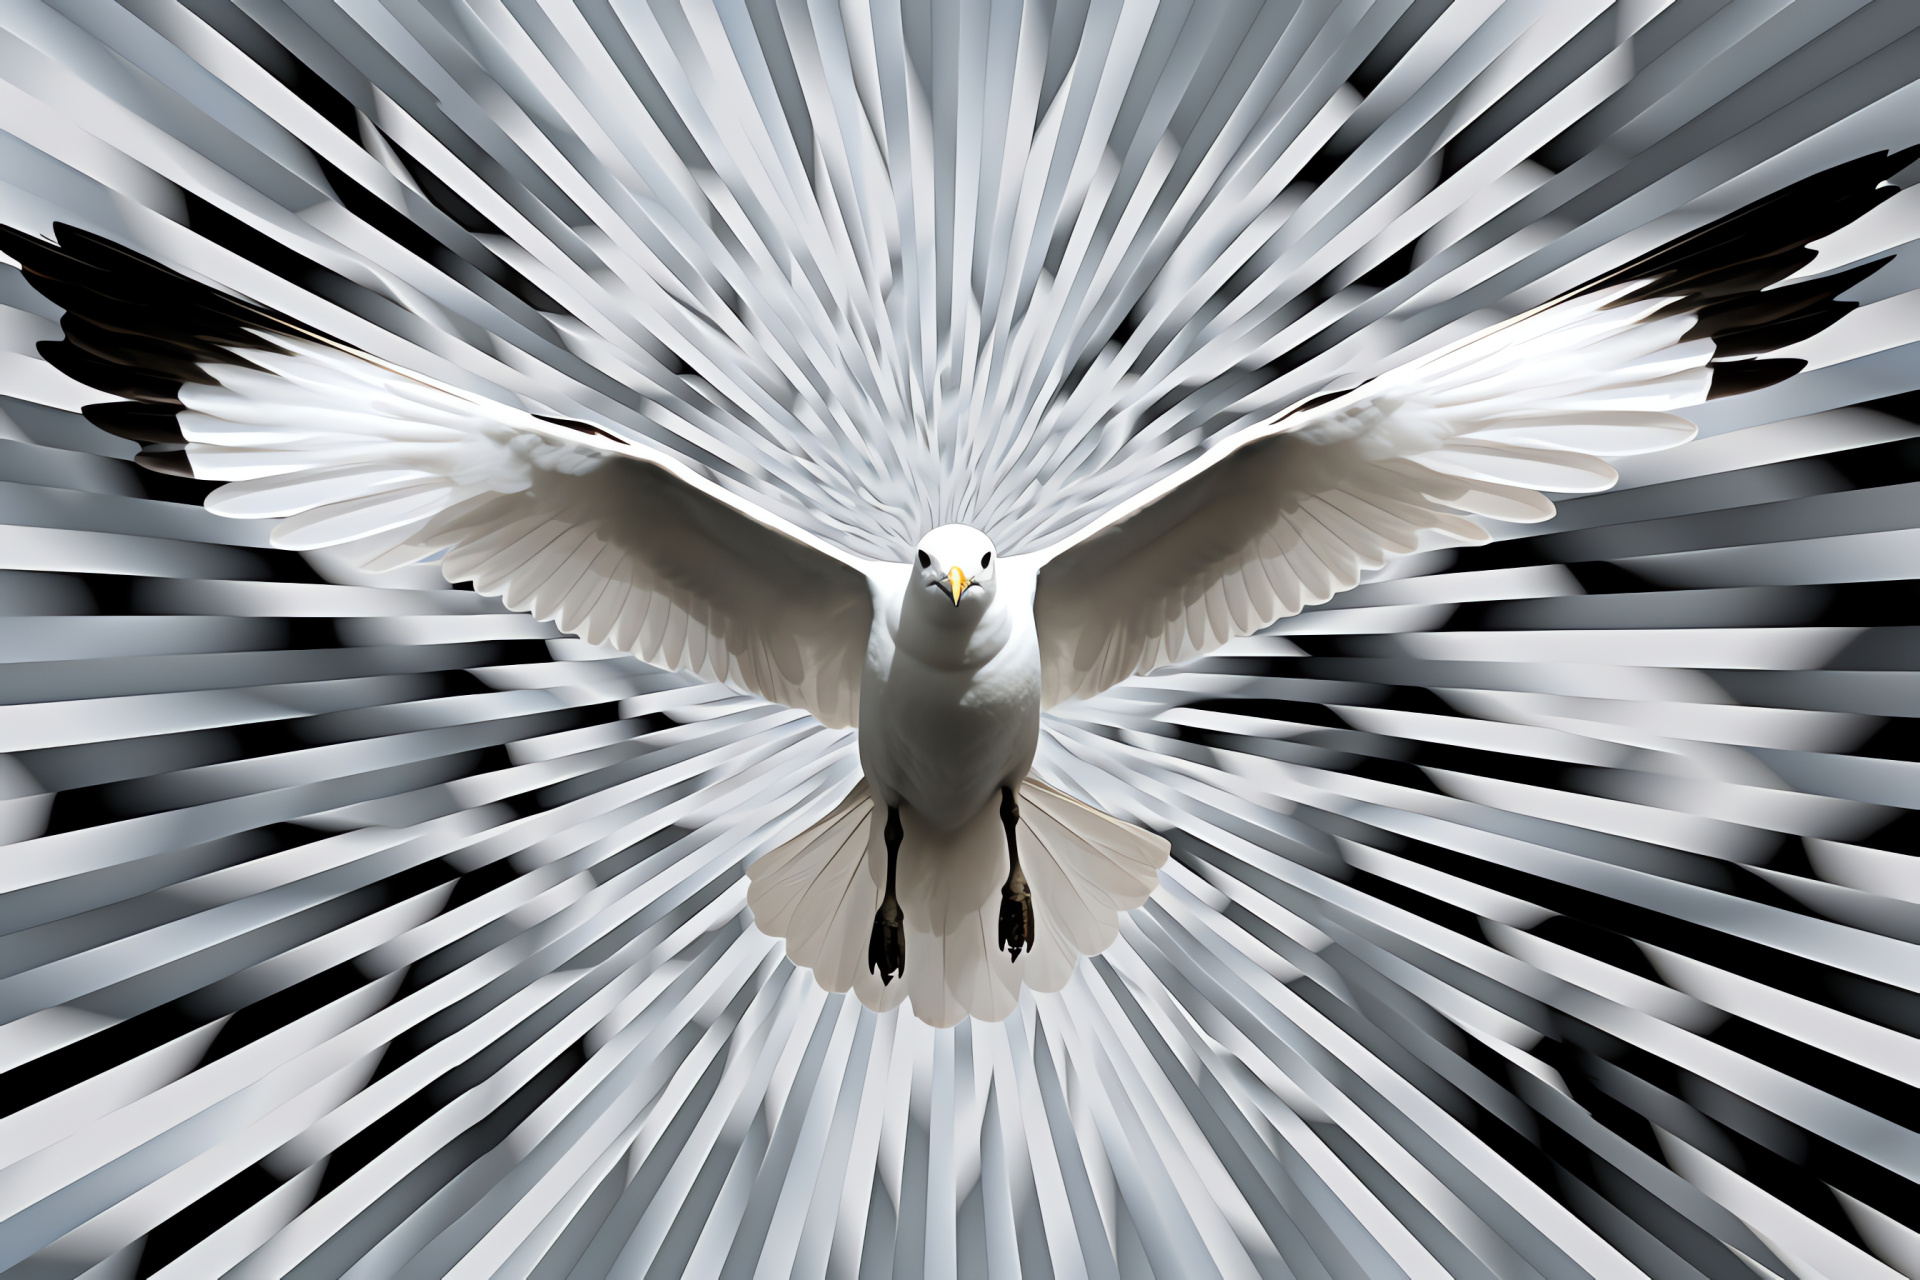 Seagull in flight, seafaring bird species, coastal avian movement, aerial freedom, sky voyager, HD Desktop Image